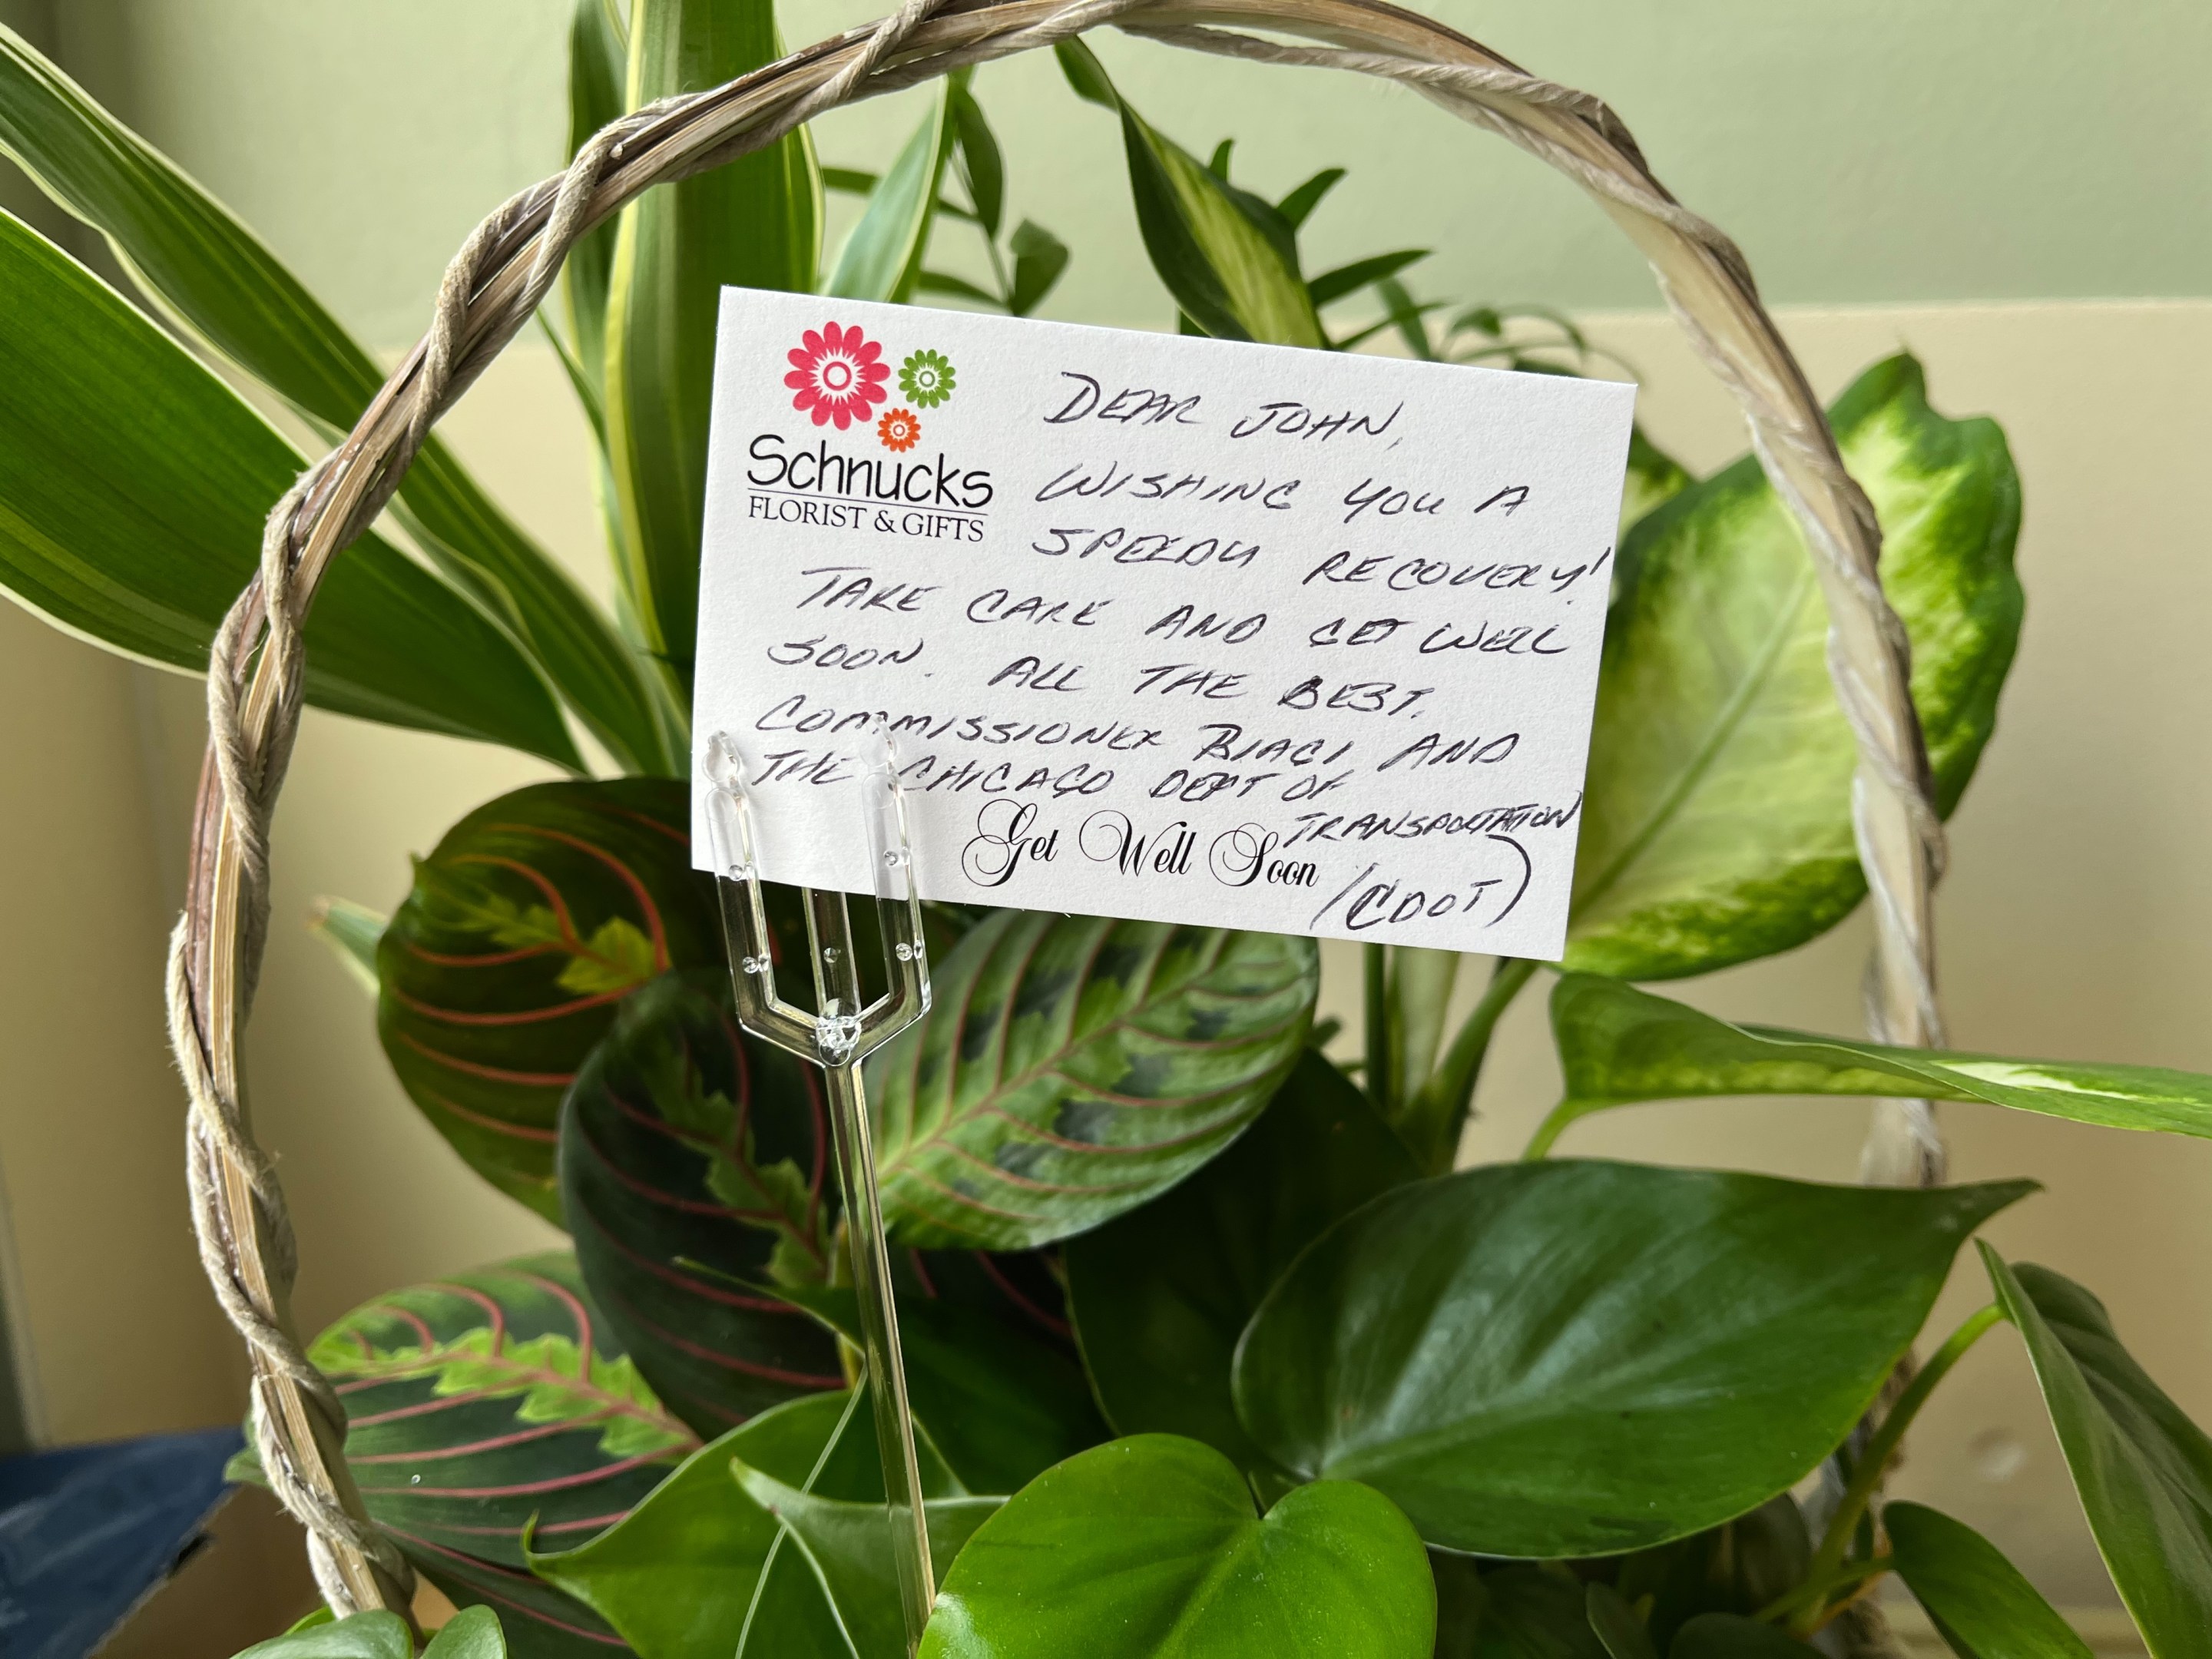 A planter with a handwritten card.